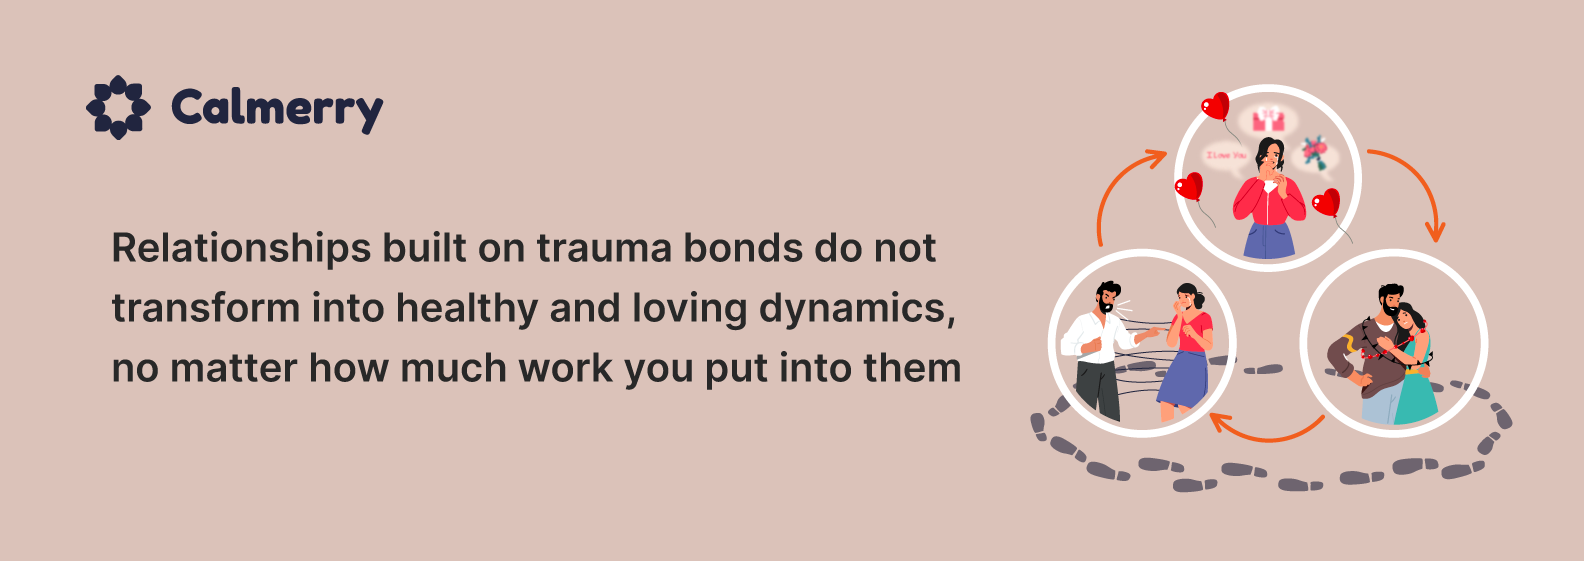 Relationships built on trauma bonds